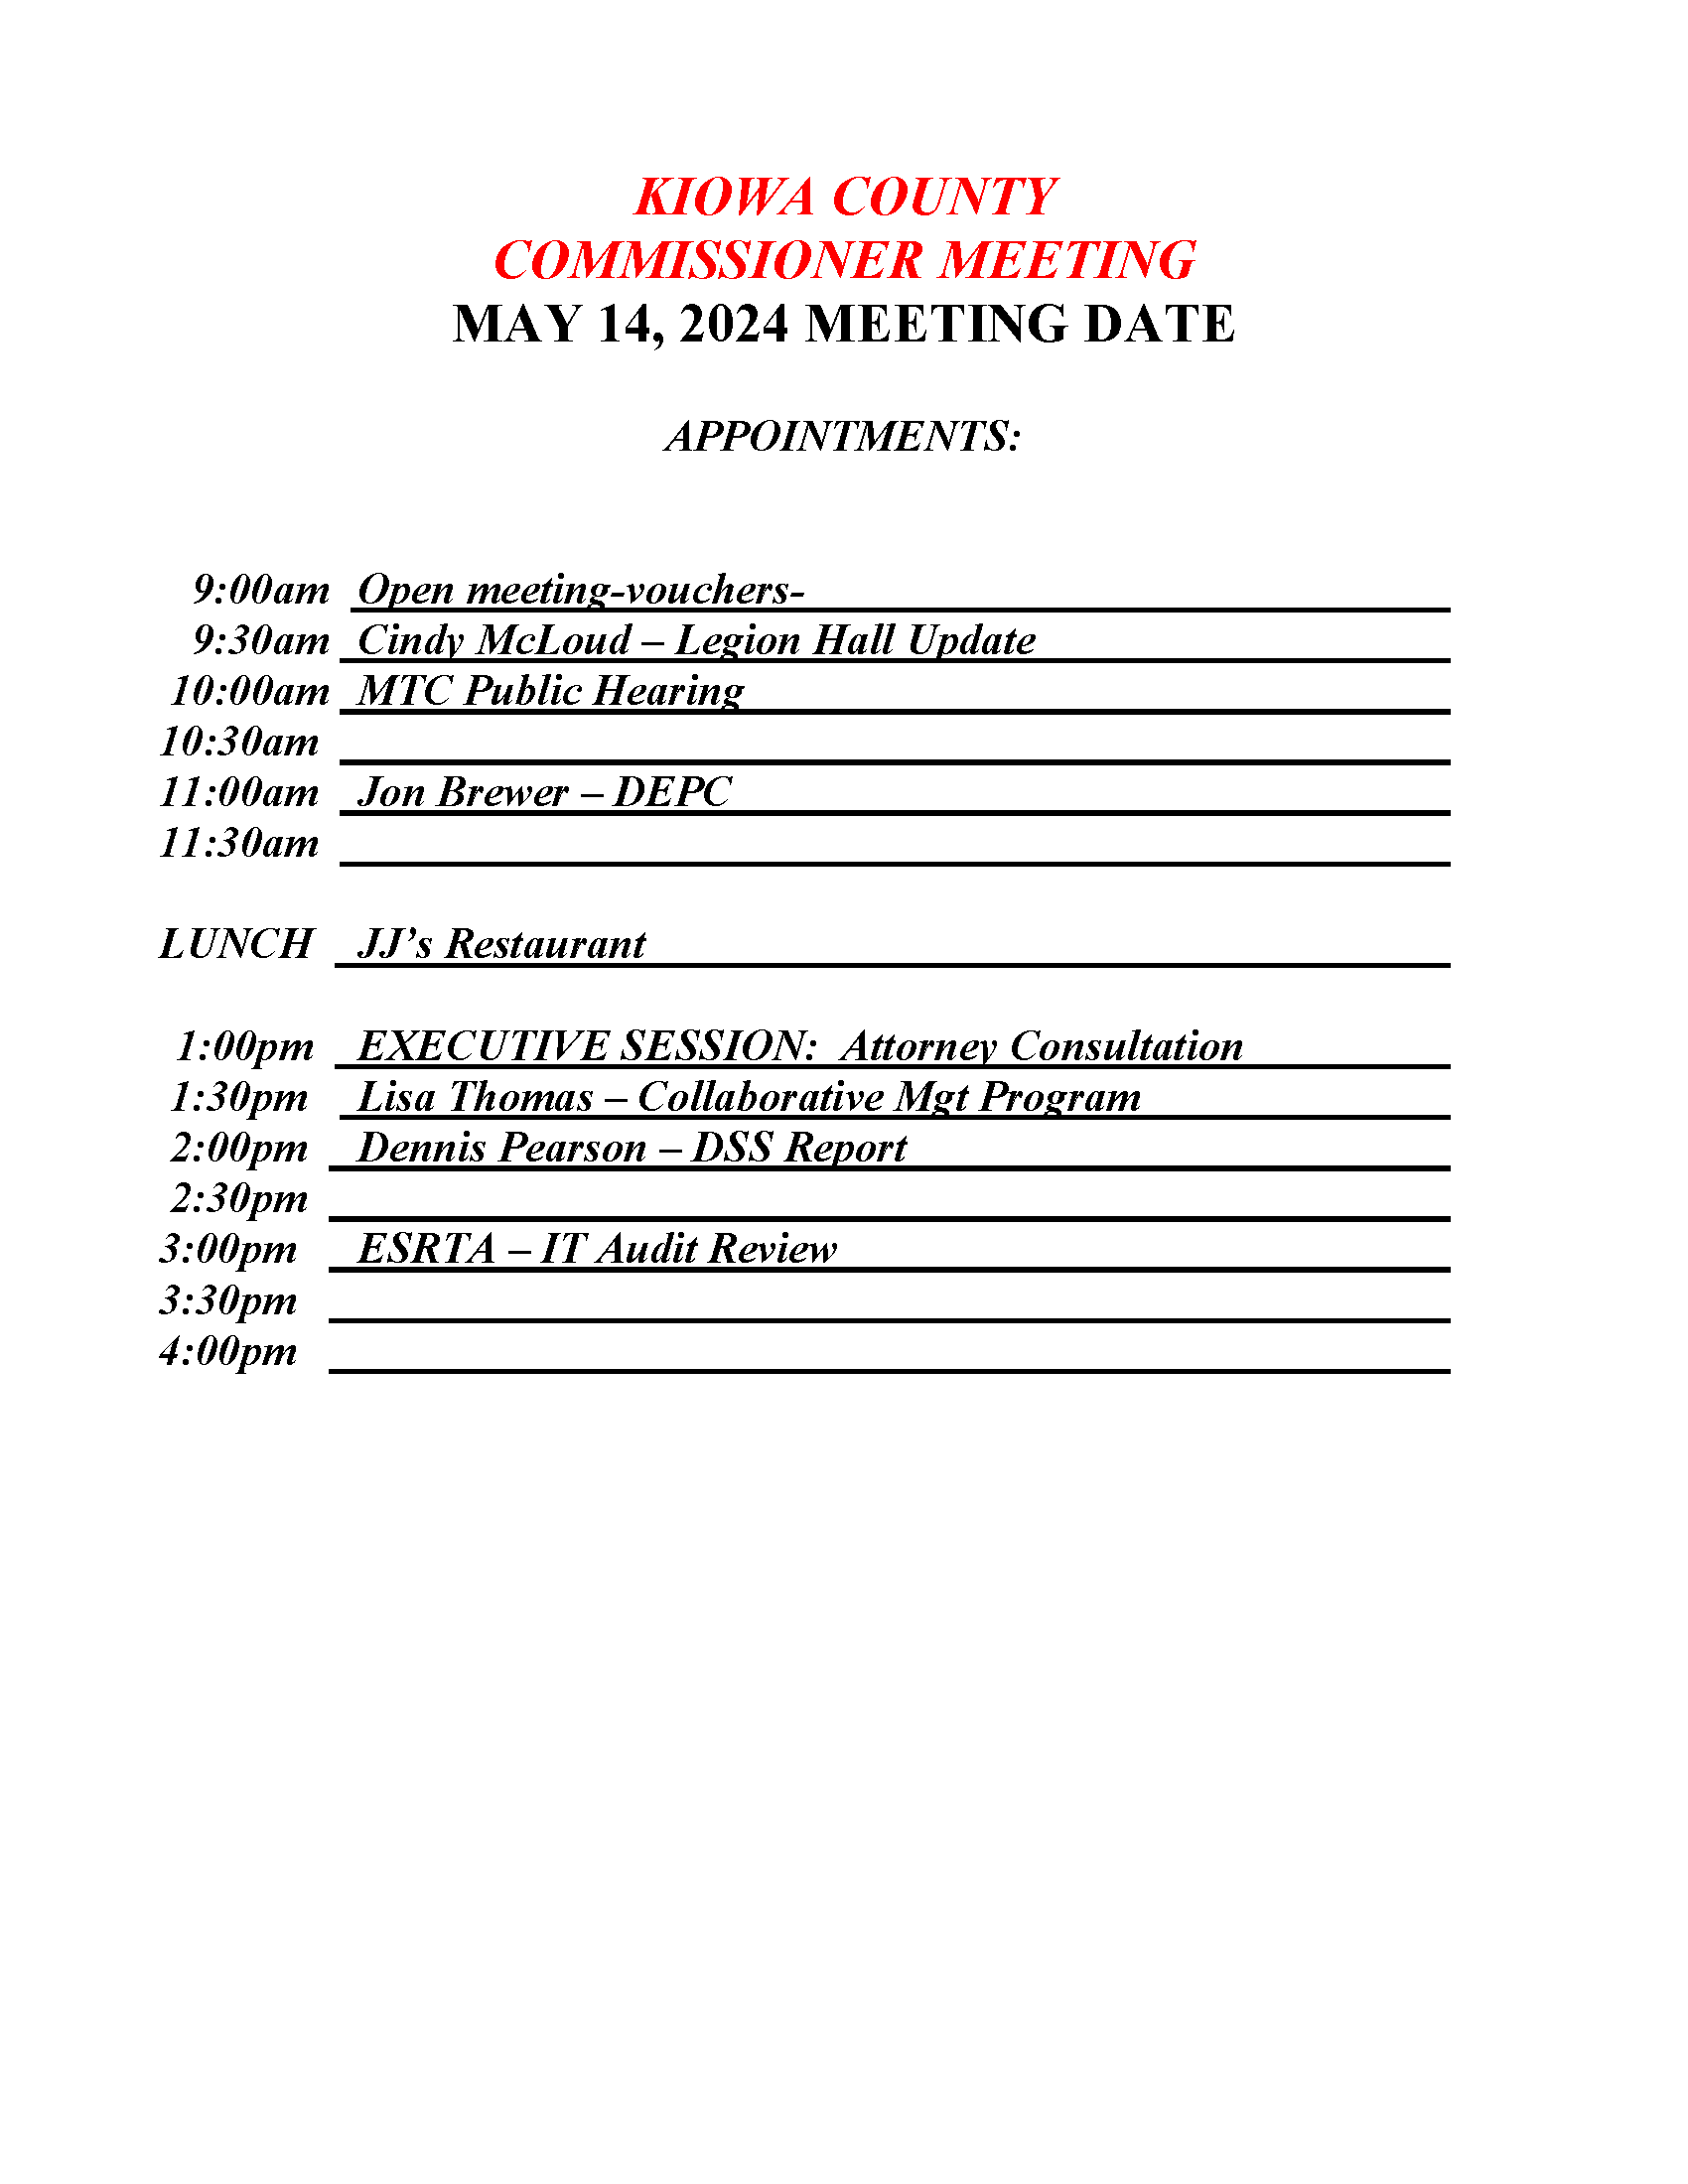 BOCC Meeting Schedule 05/14/2024